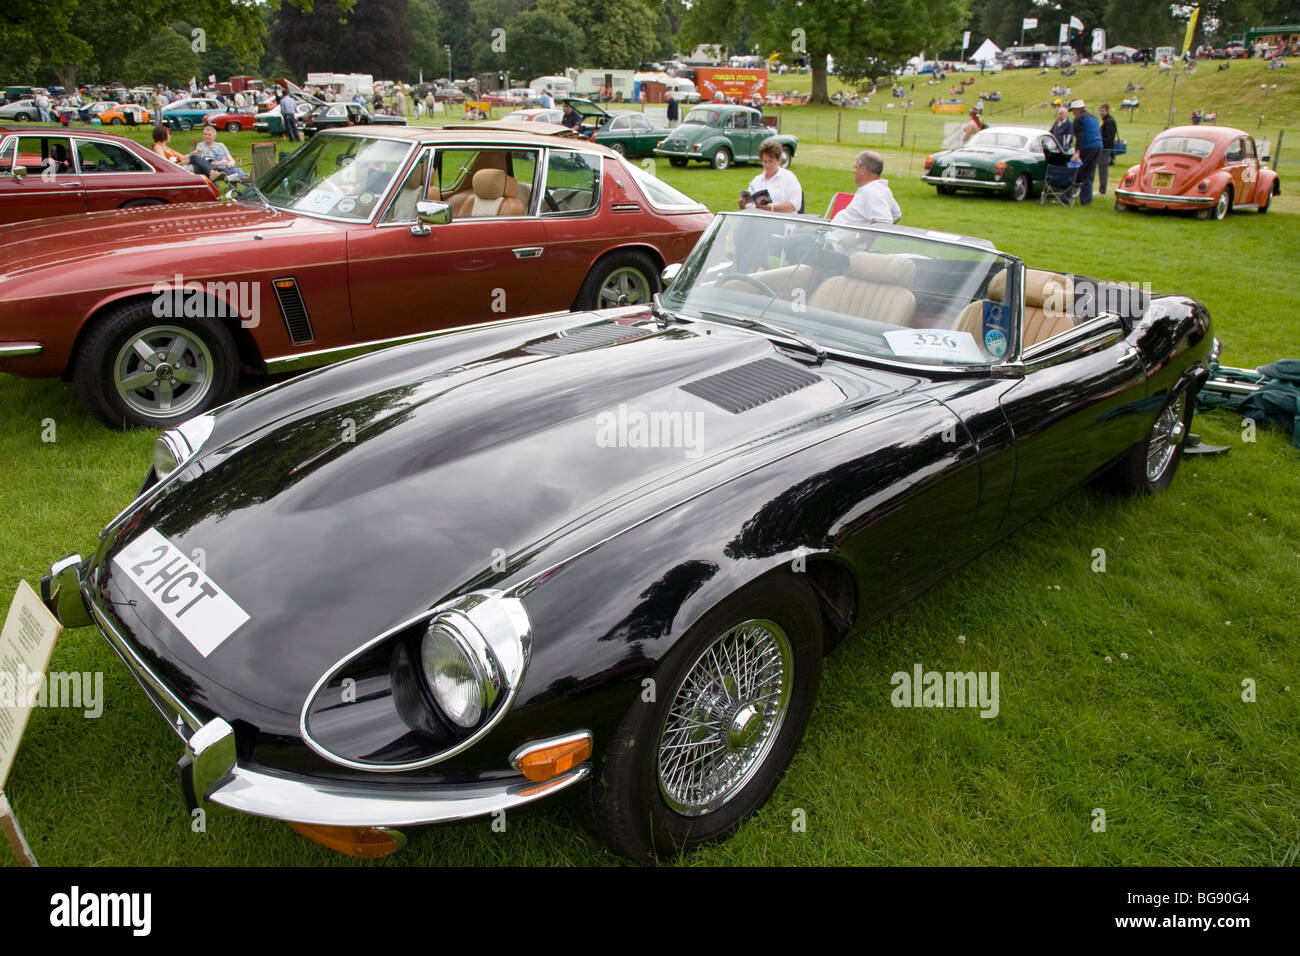 Jaguar v12 hi-res stock photography and images - Alamy